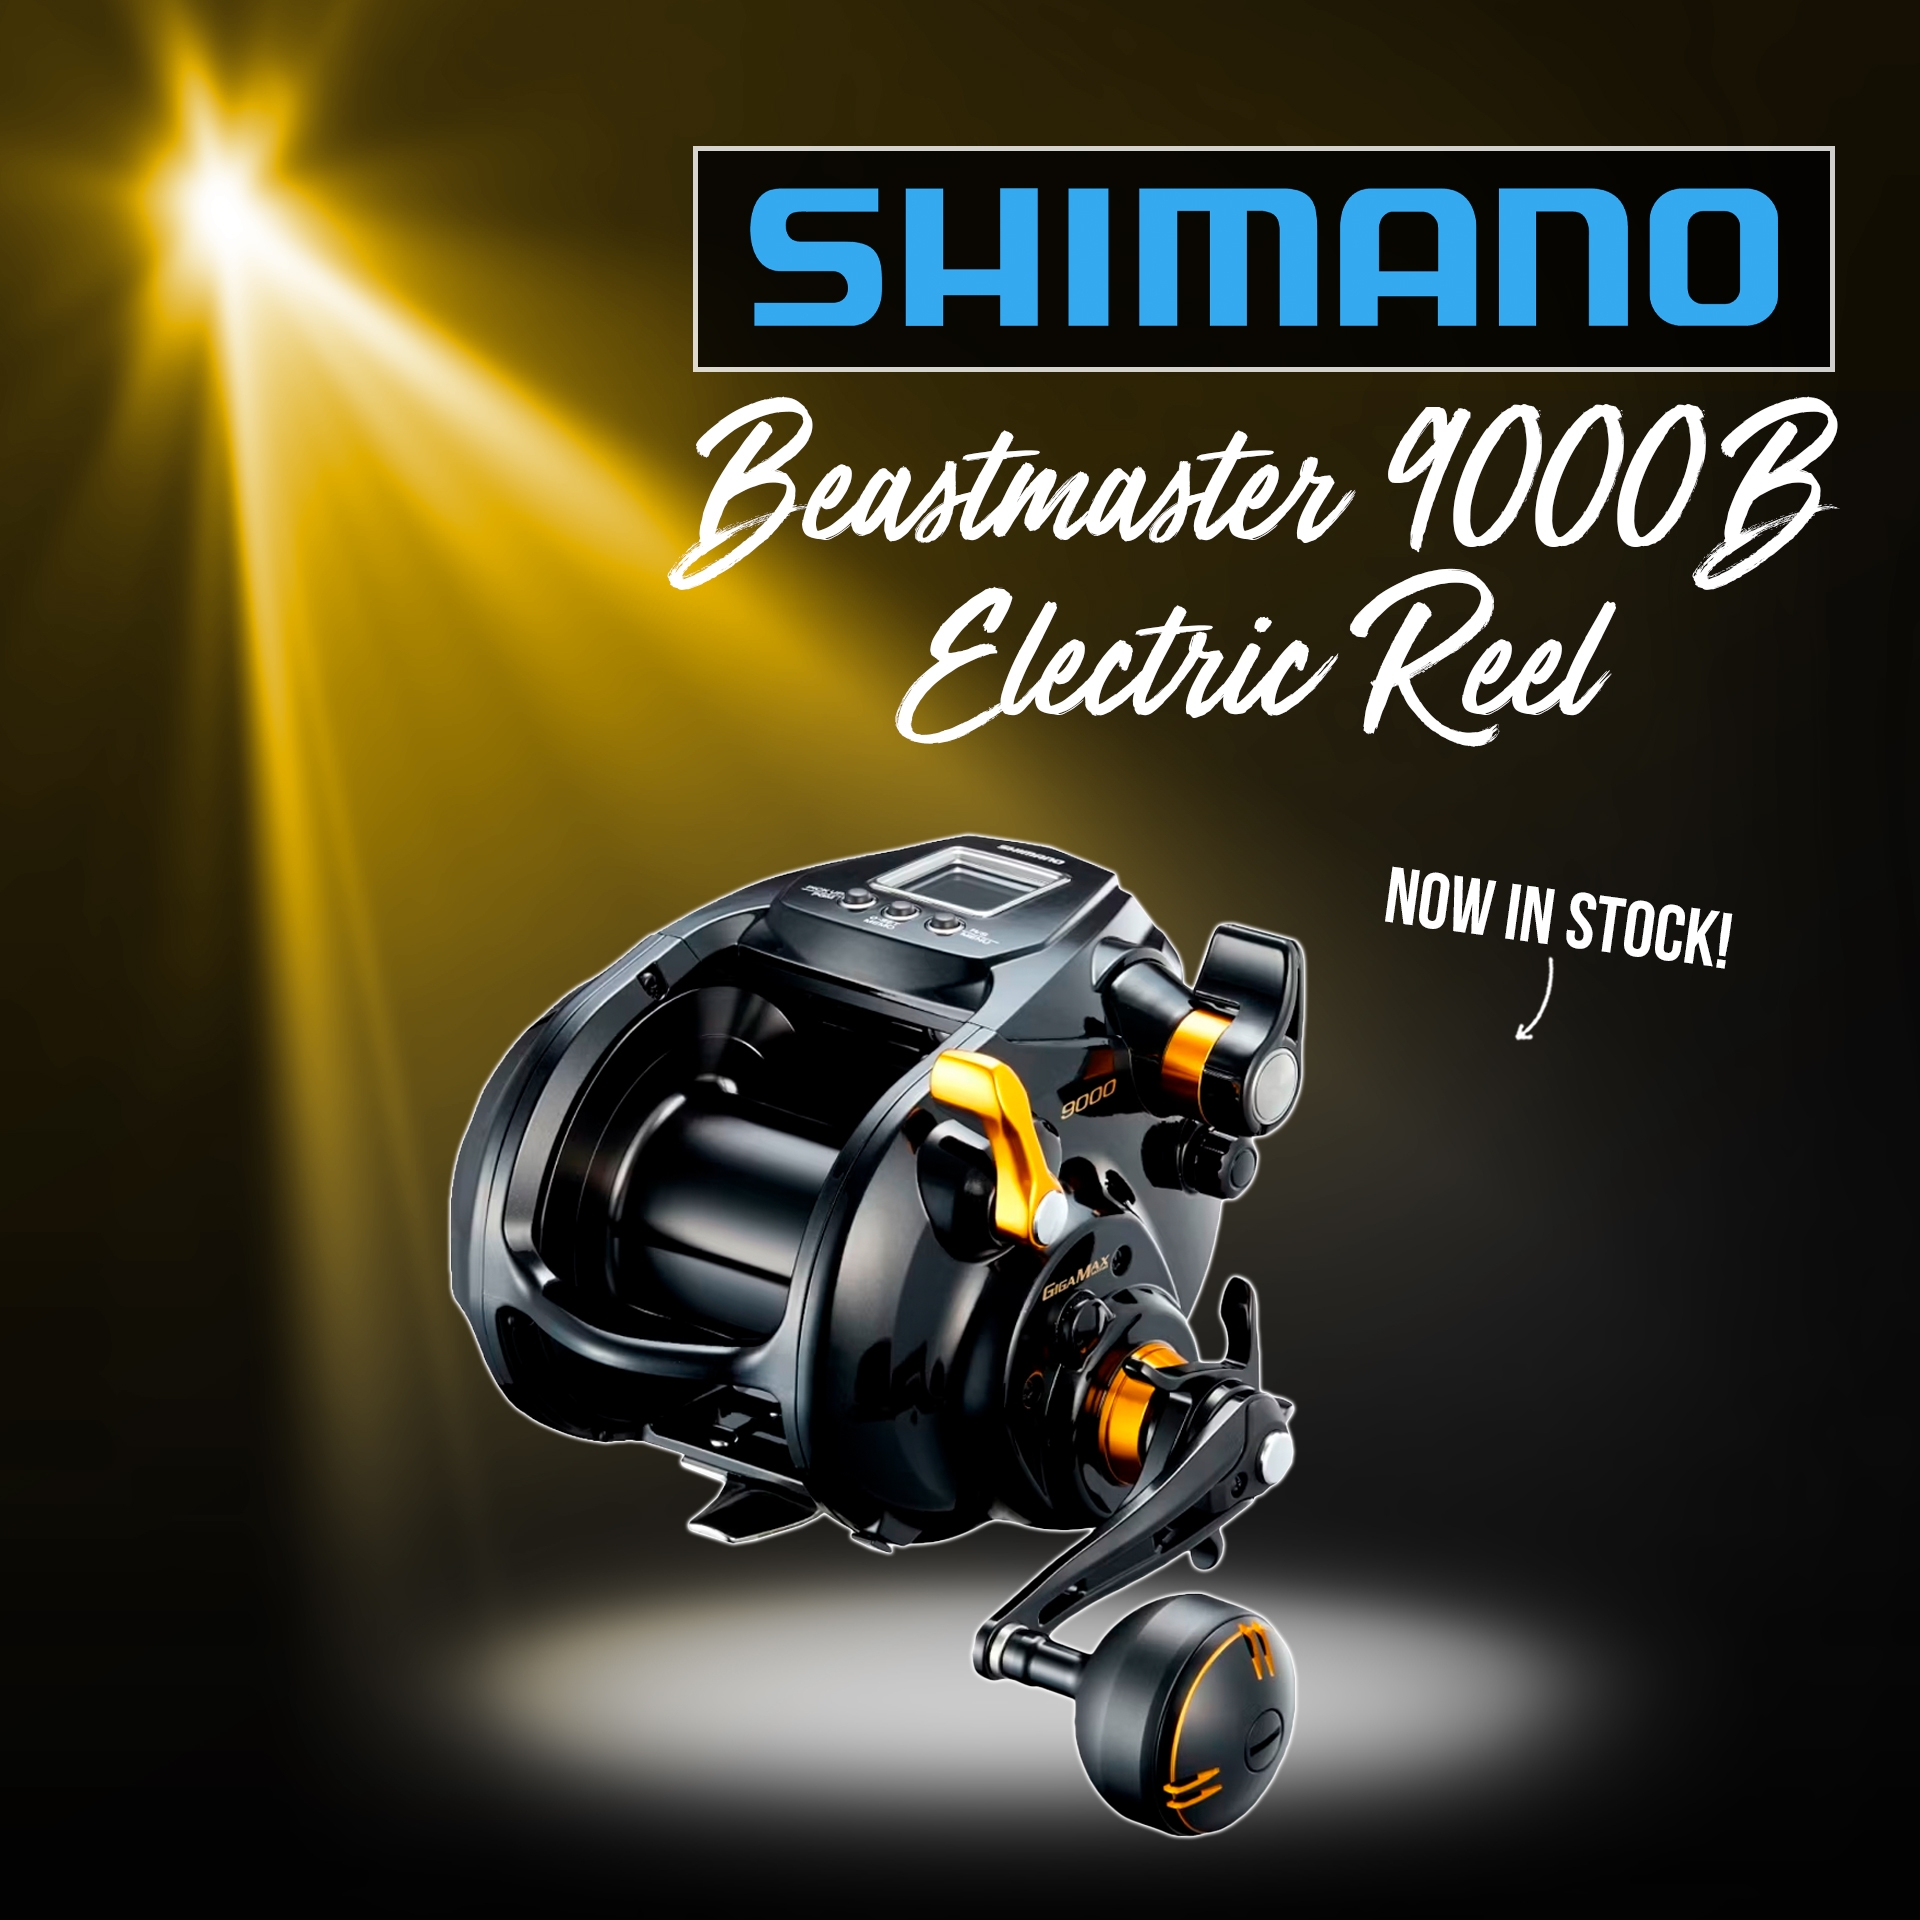 New - SHIMANO BEASTMASTER 9000B ELECTRIC REEL